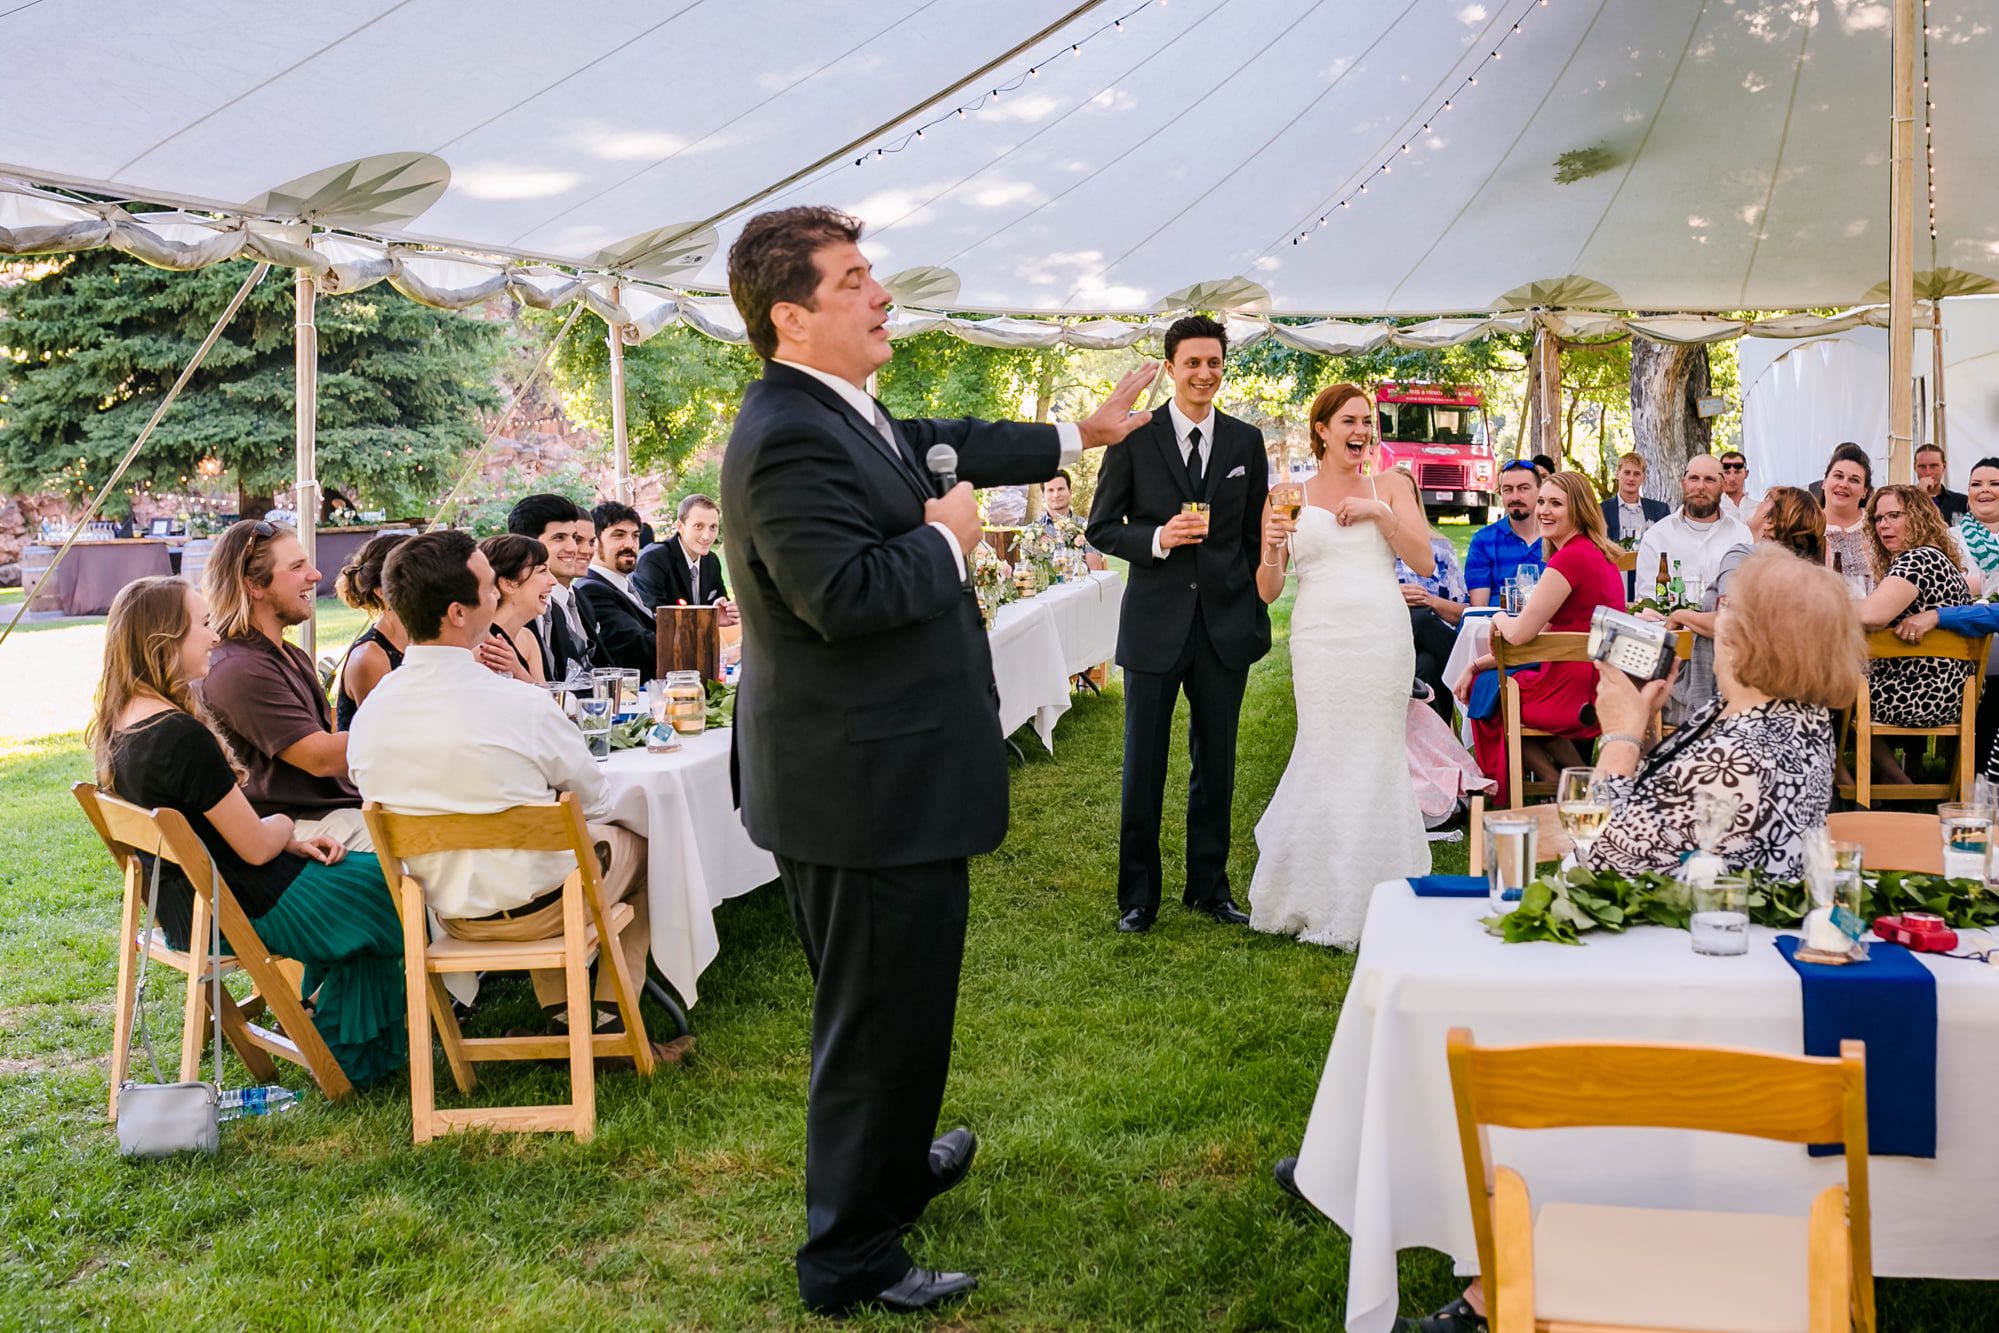 guest speeches, tent wedding, outside wedding, eating outdoors wedding, colorado summer wedding, colorado outdoor wedding venue